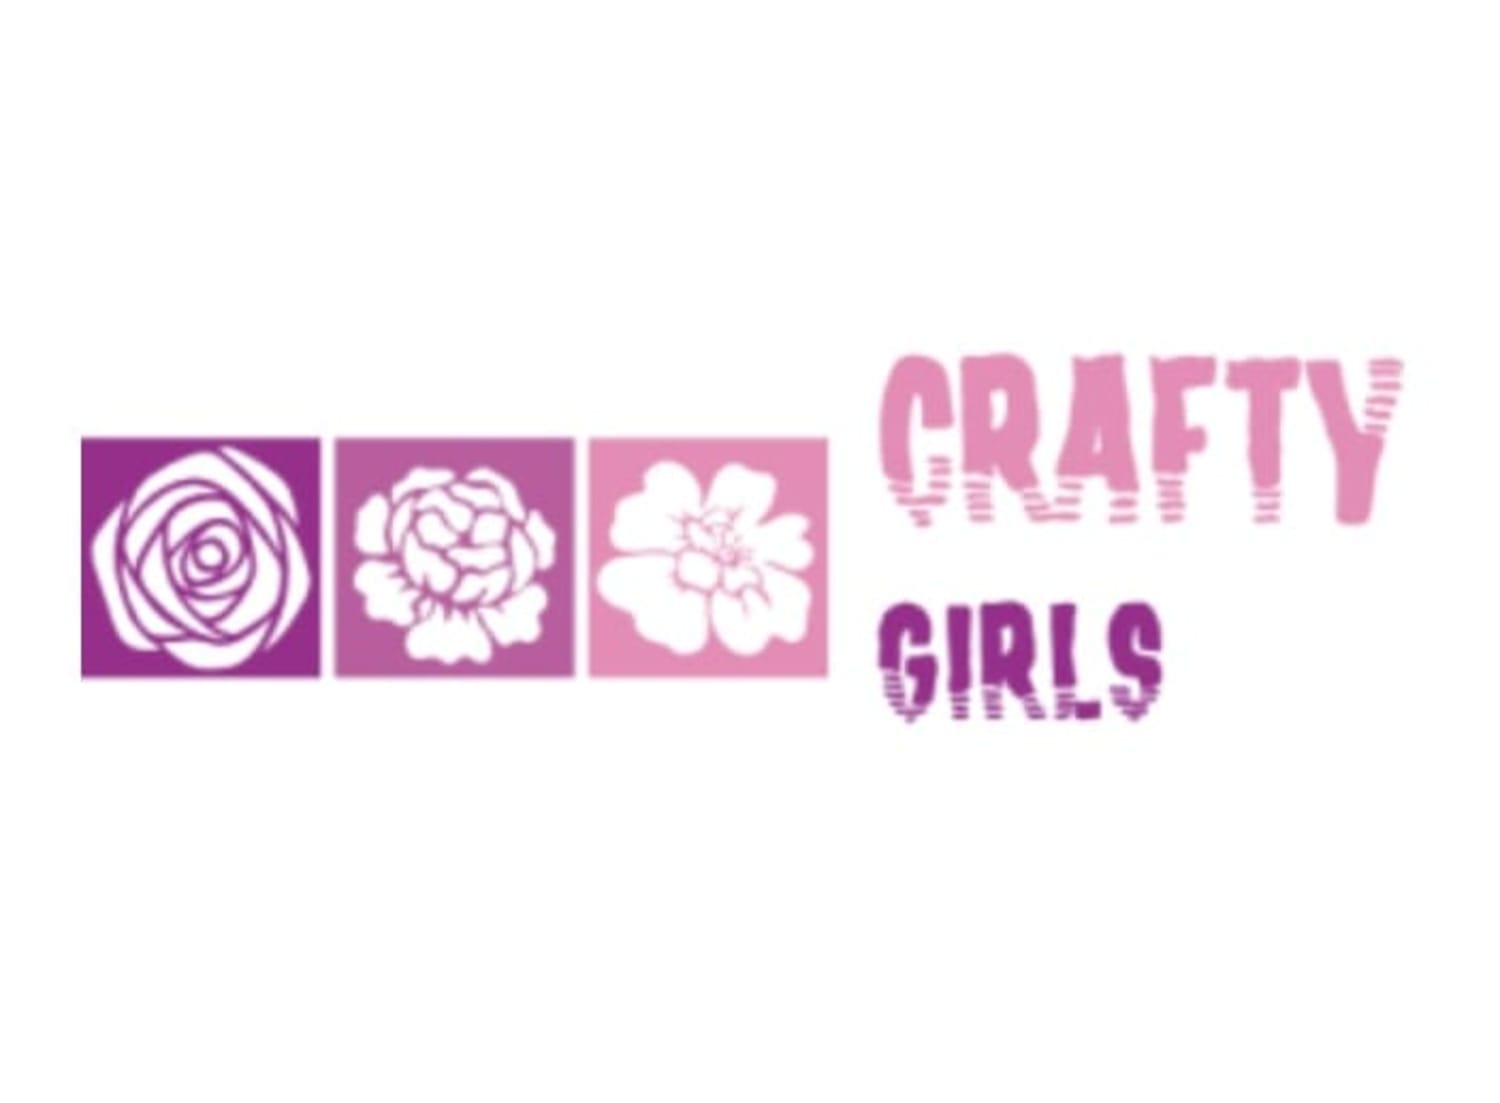 The Crafty Girls